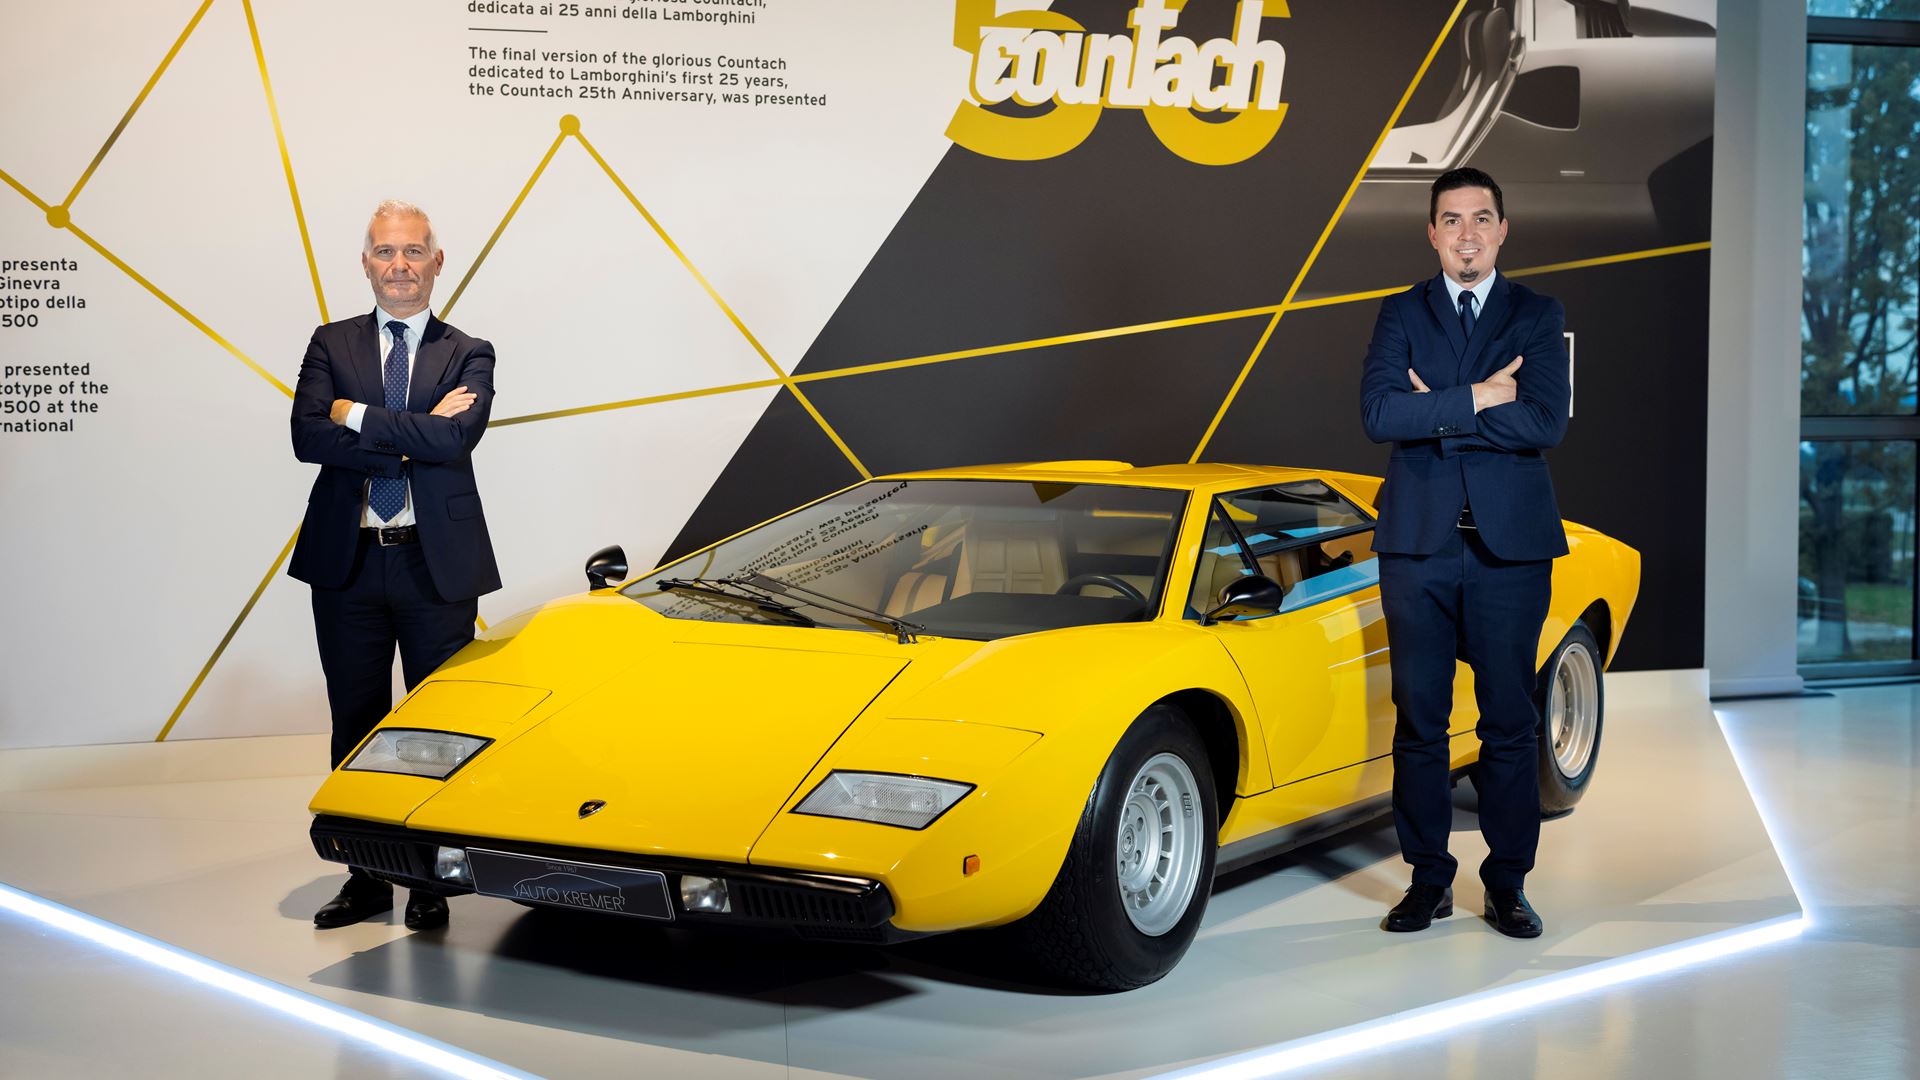 Automobili Lamborghini announces two new appointments - Image 1